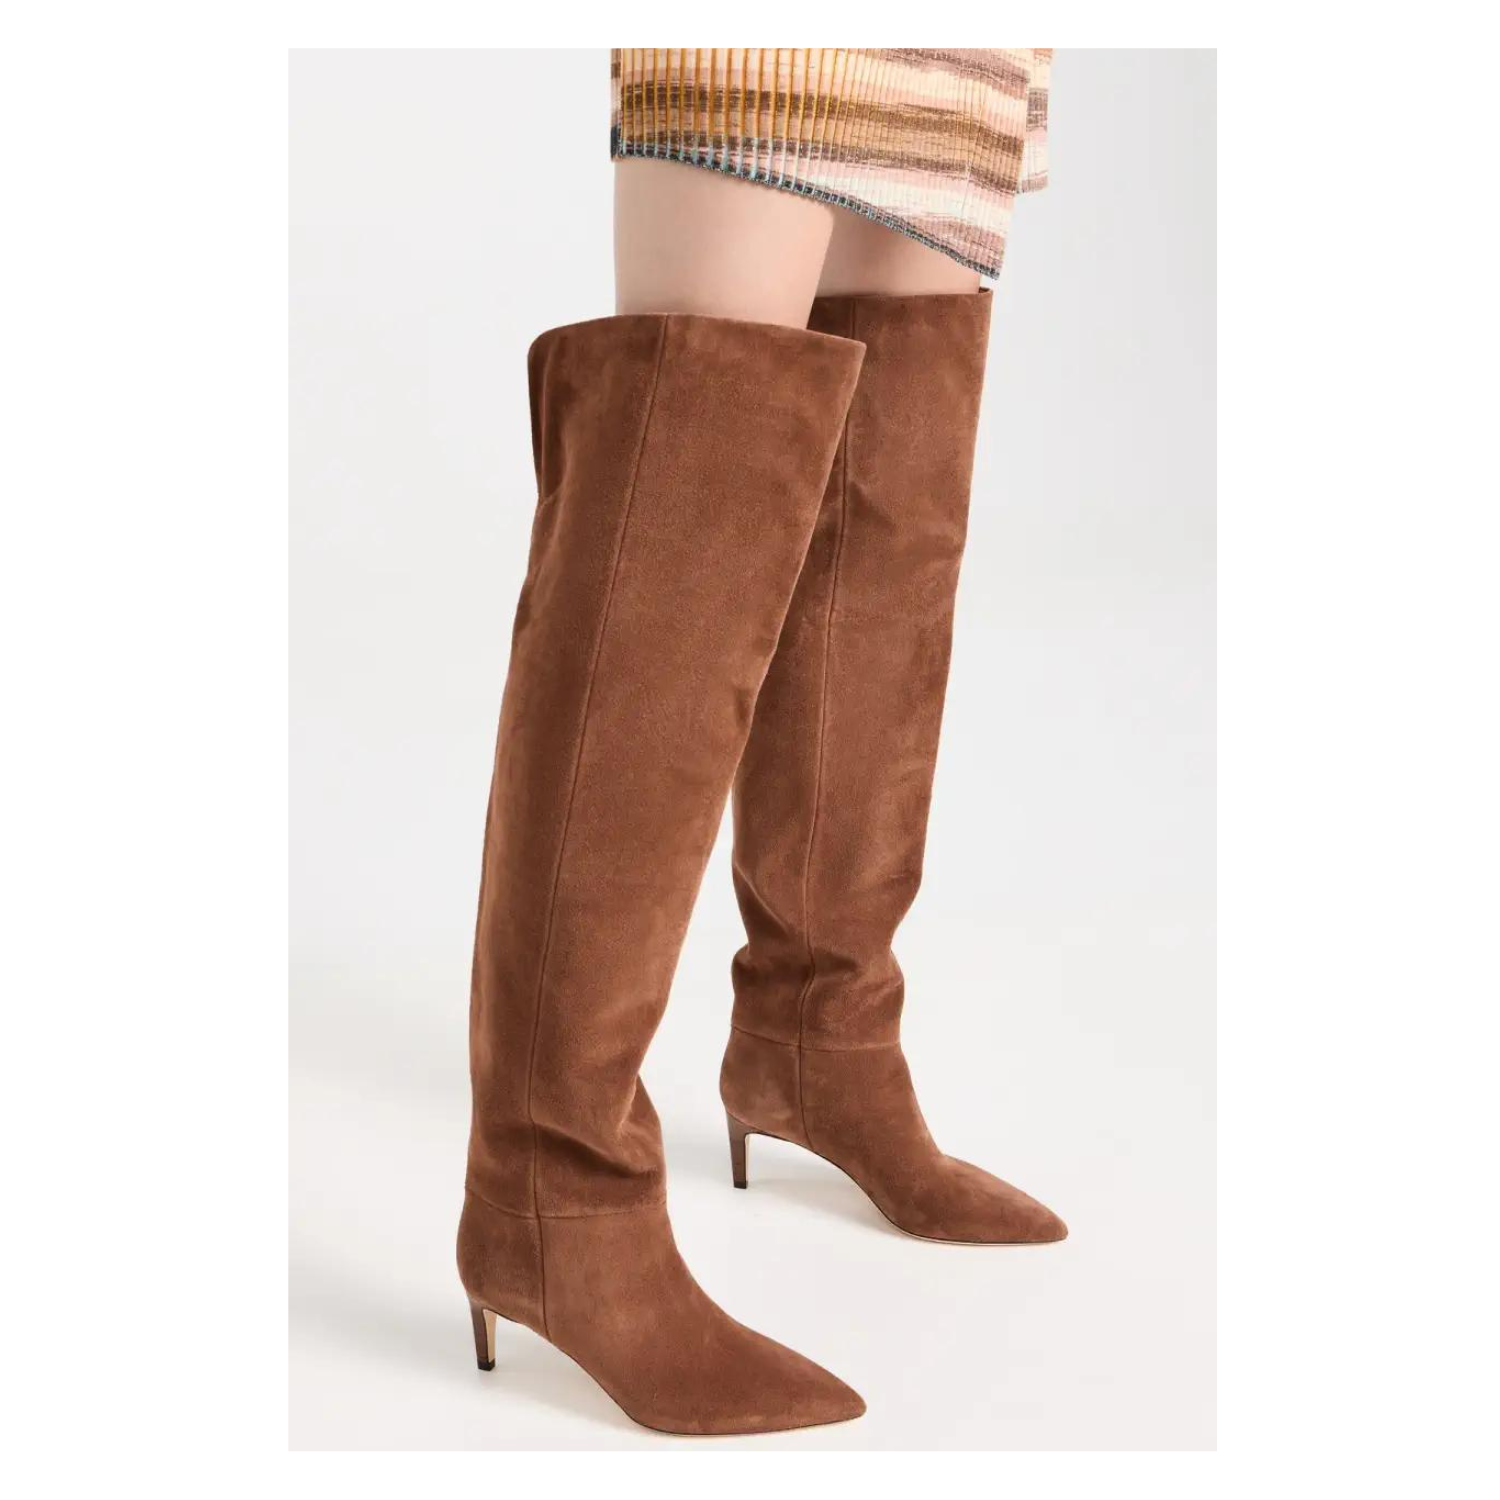 Paris Texas Stiletto Over The Knee Boots, $960